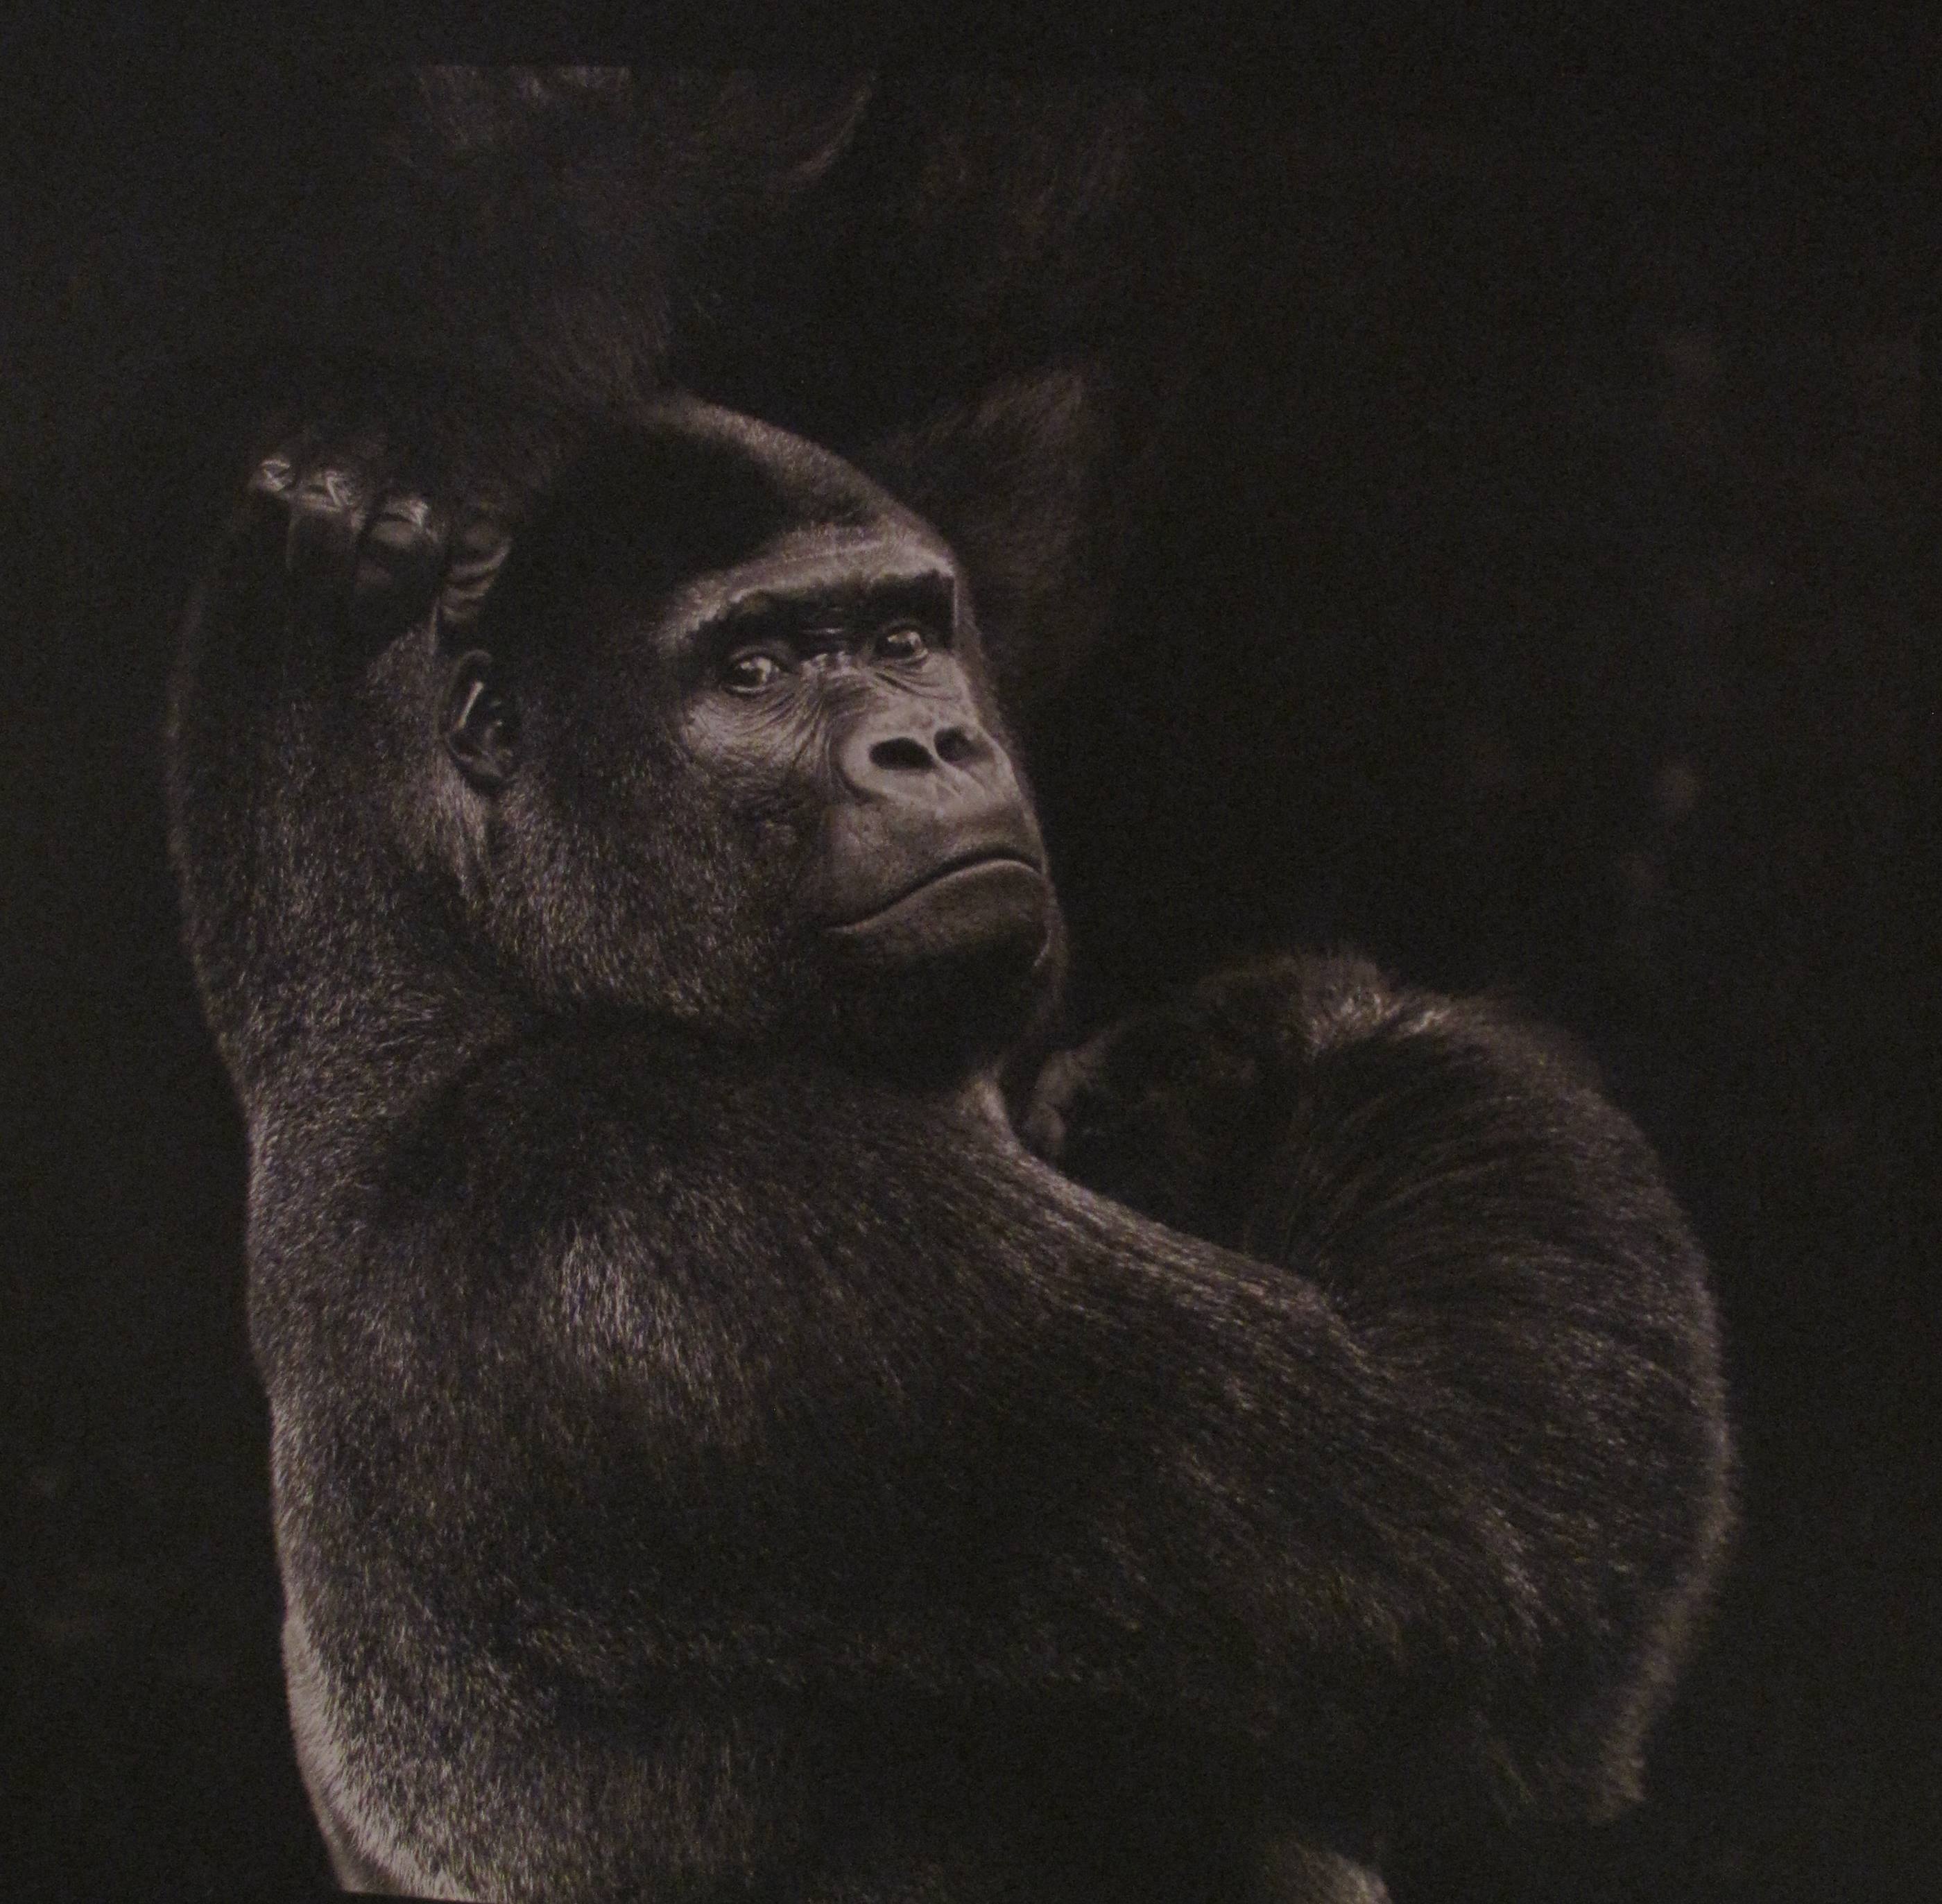 Serie primates. S/T, 2014<br/>